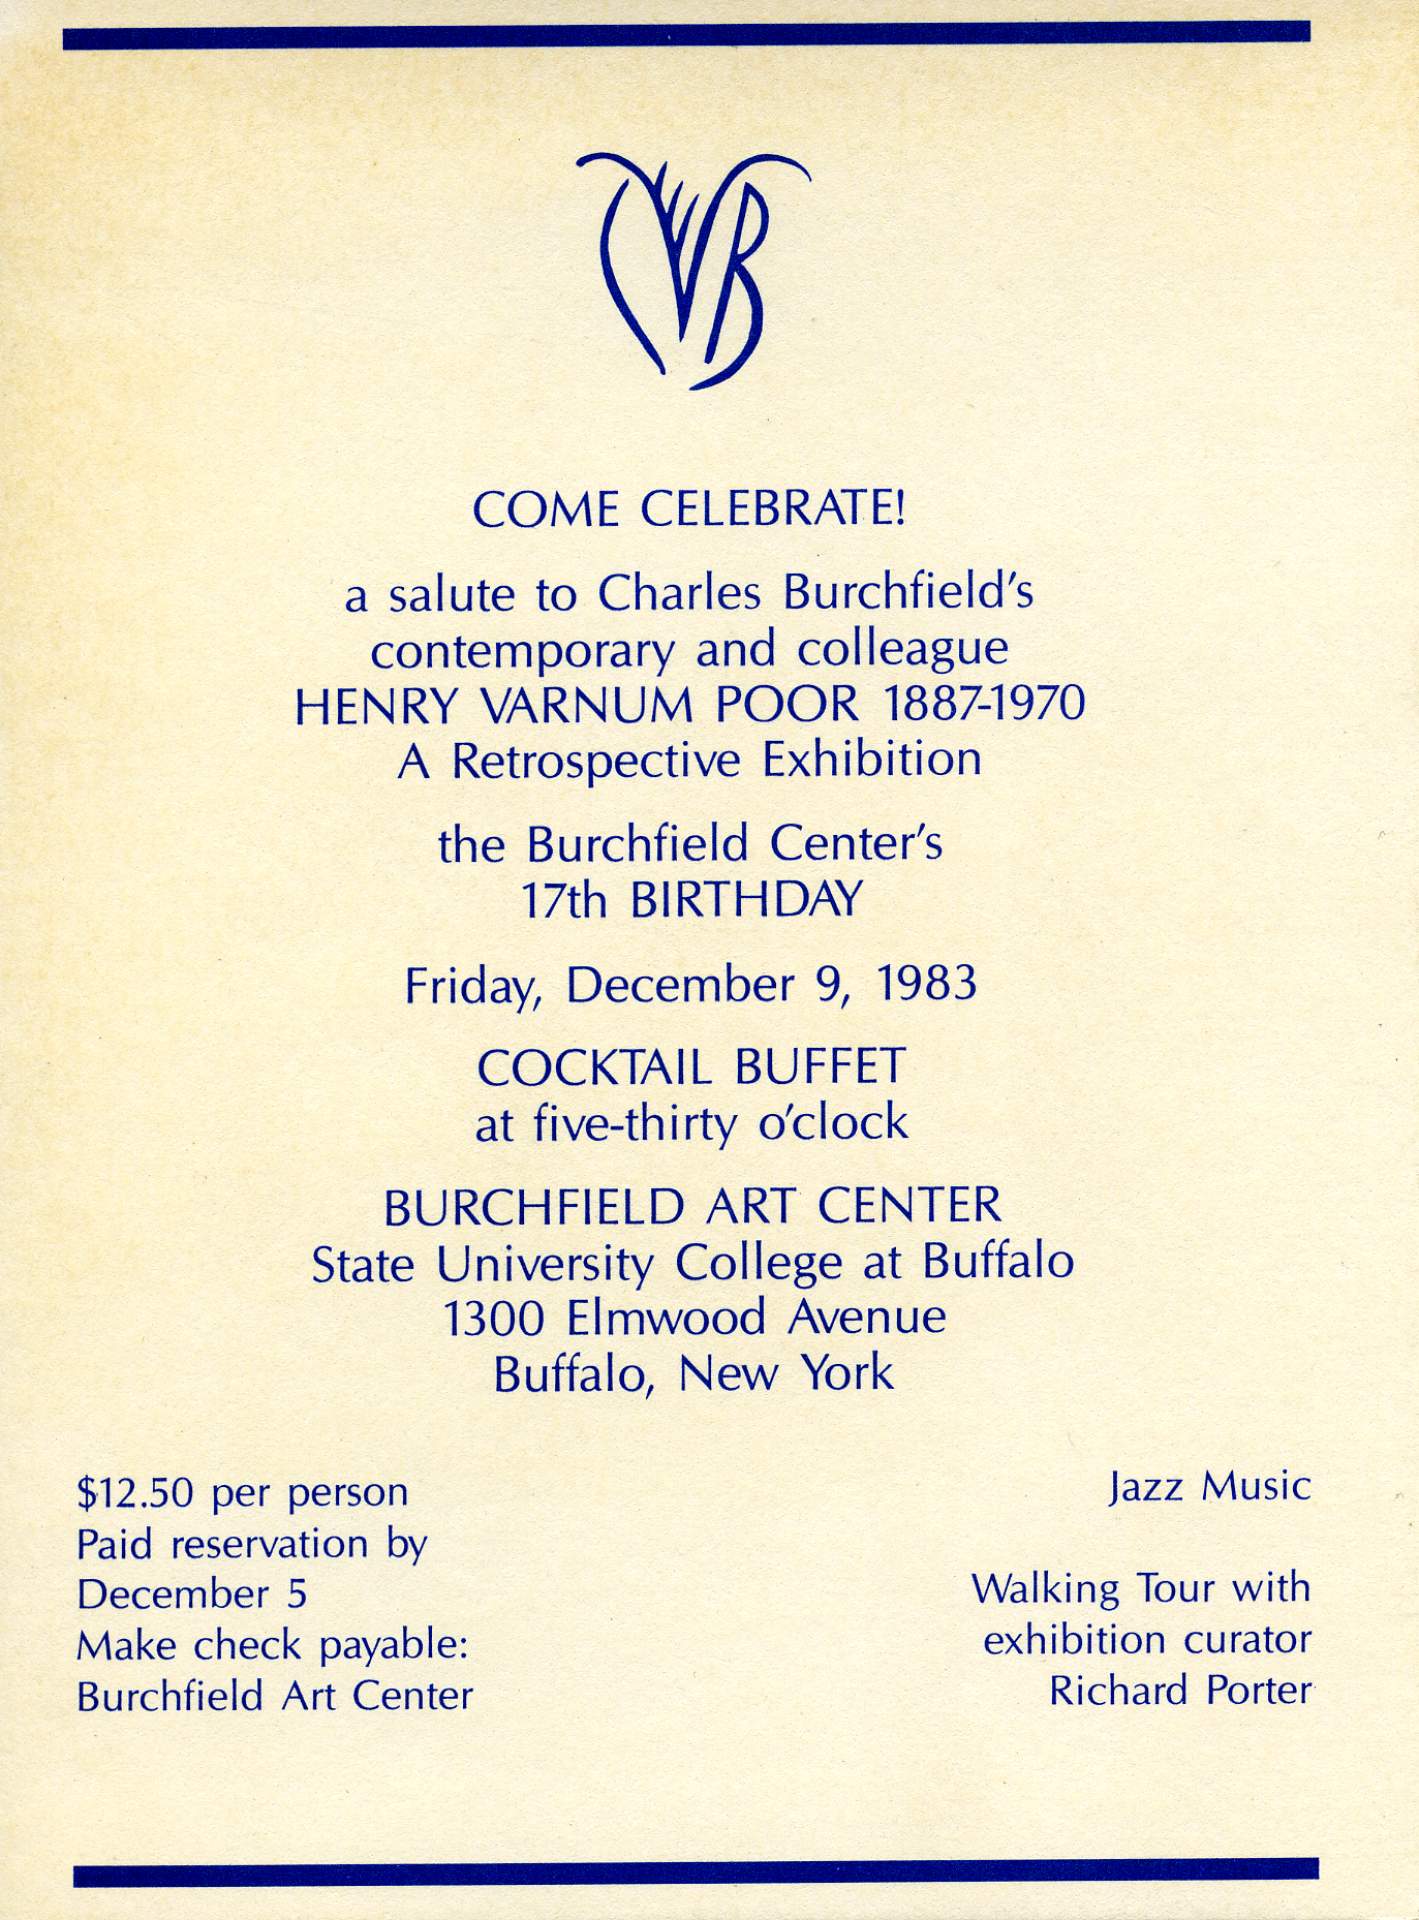 Henry Varnum Poor 1887-1970 exhibition invitation